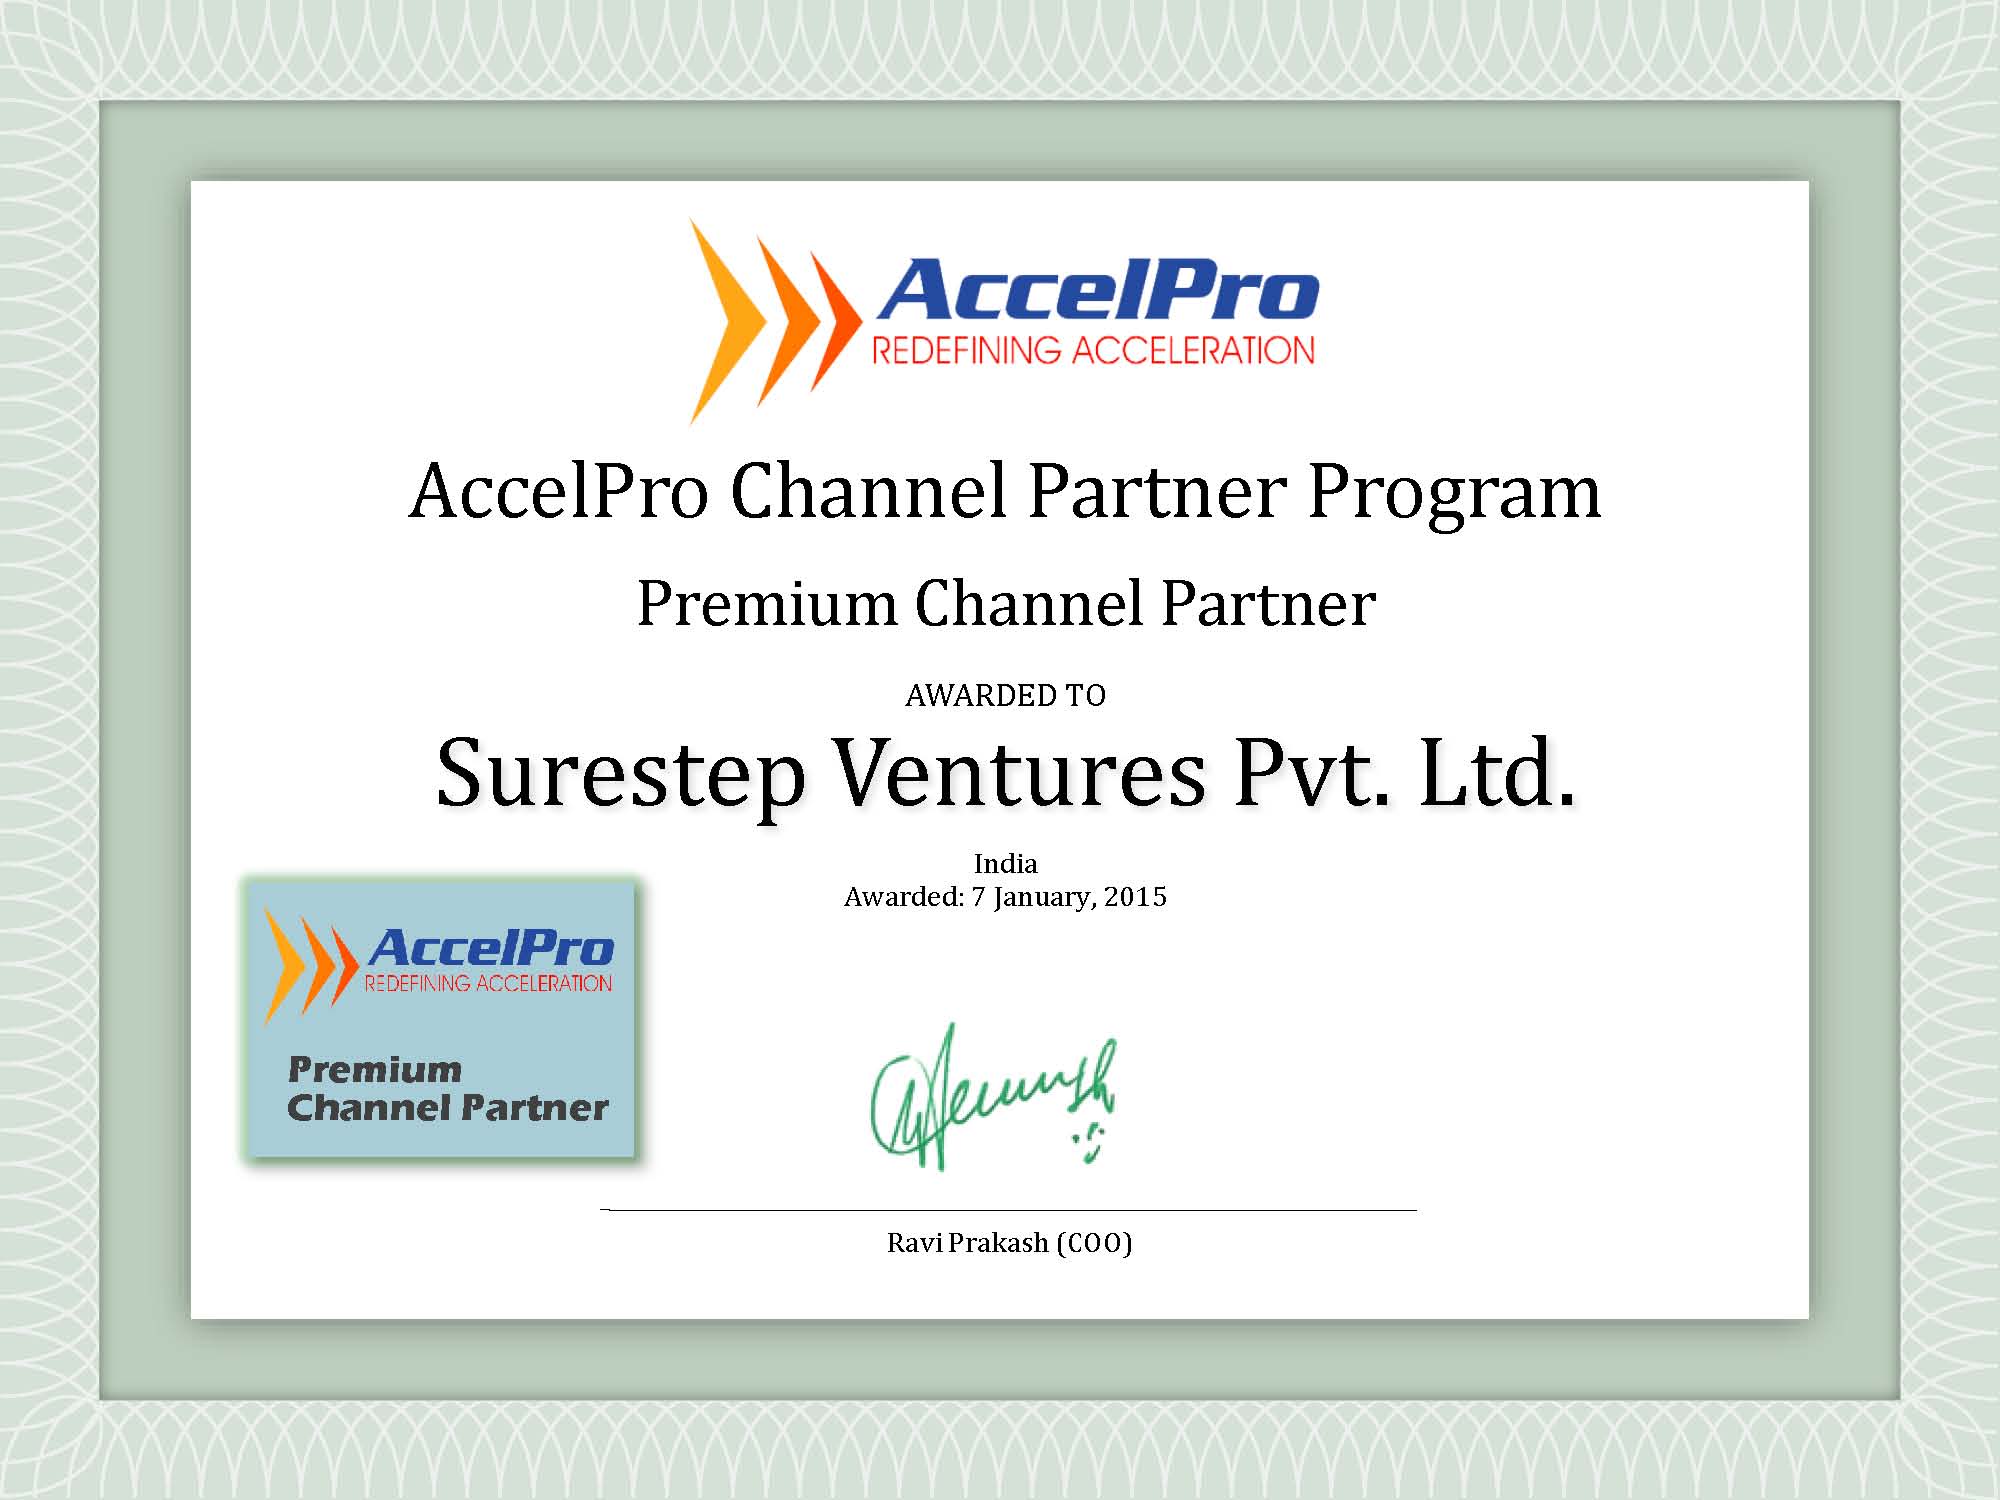 Accelpro Partnership